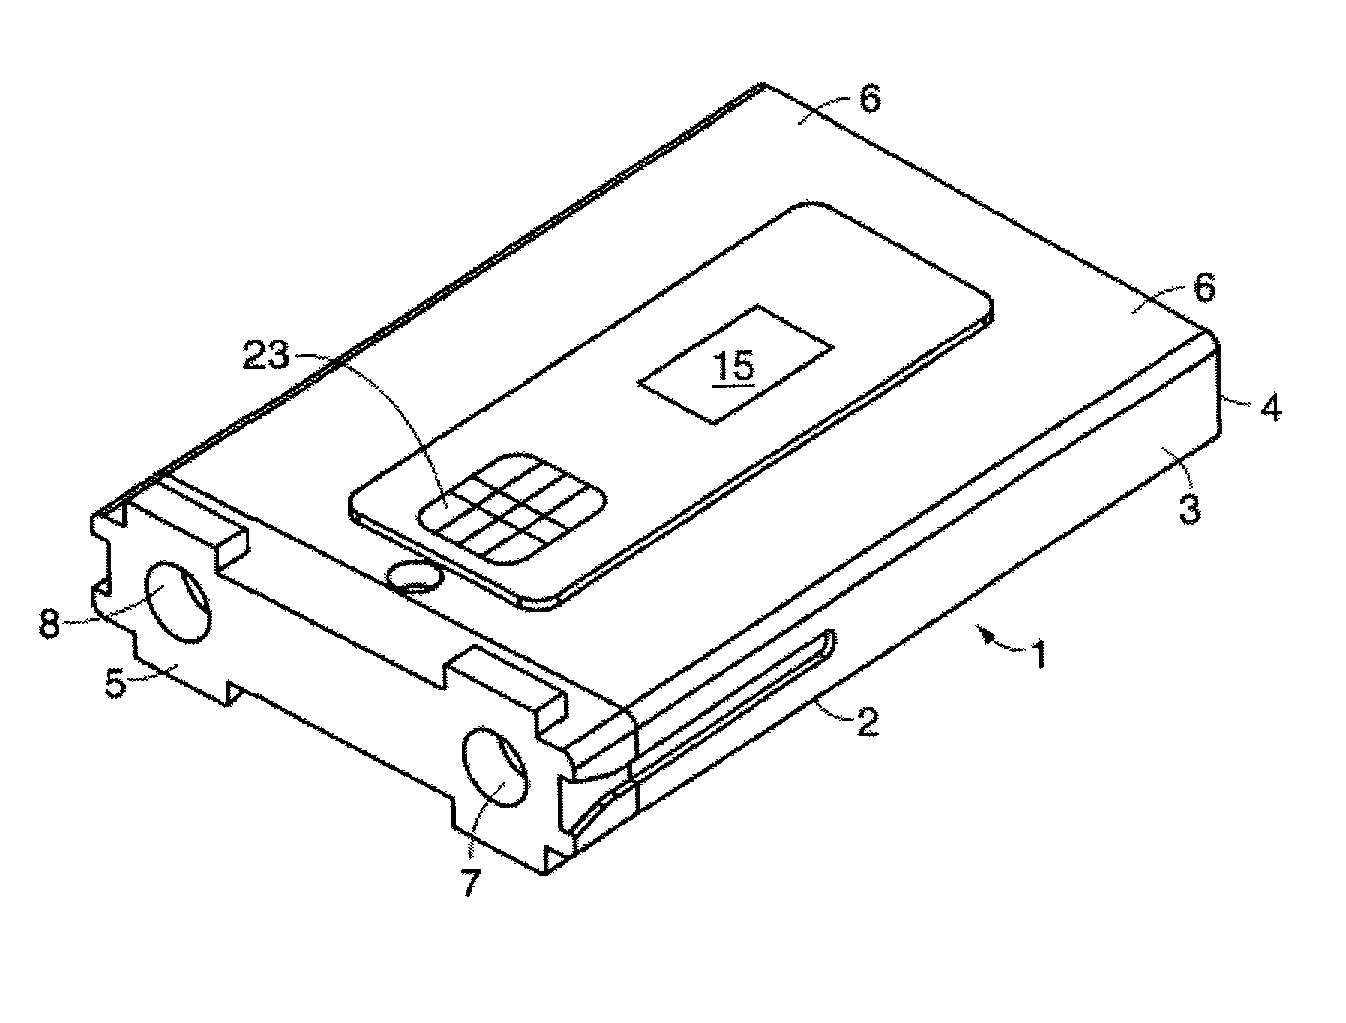 Fluid Separate conduit cartridge